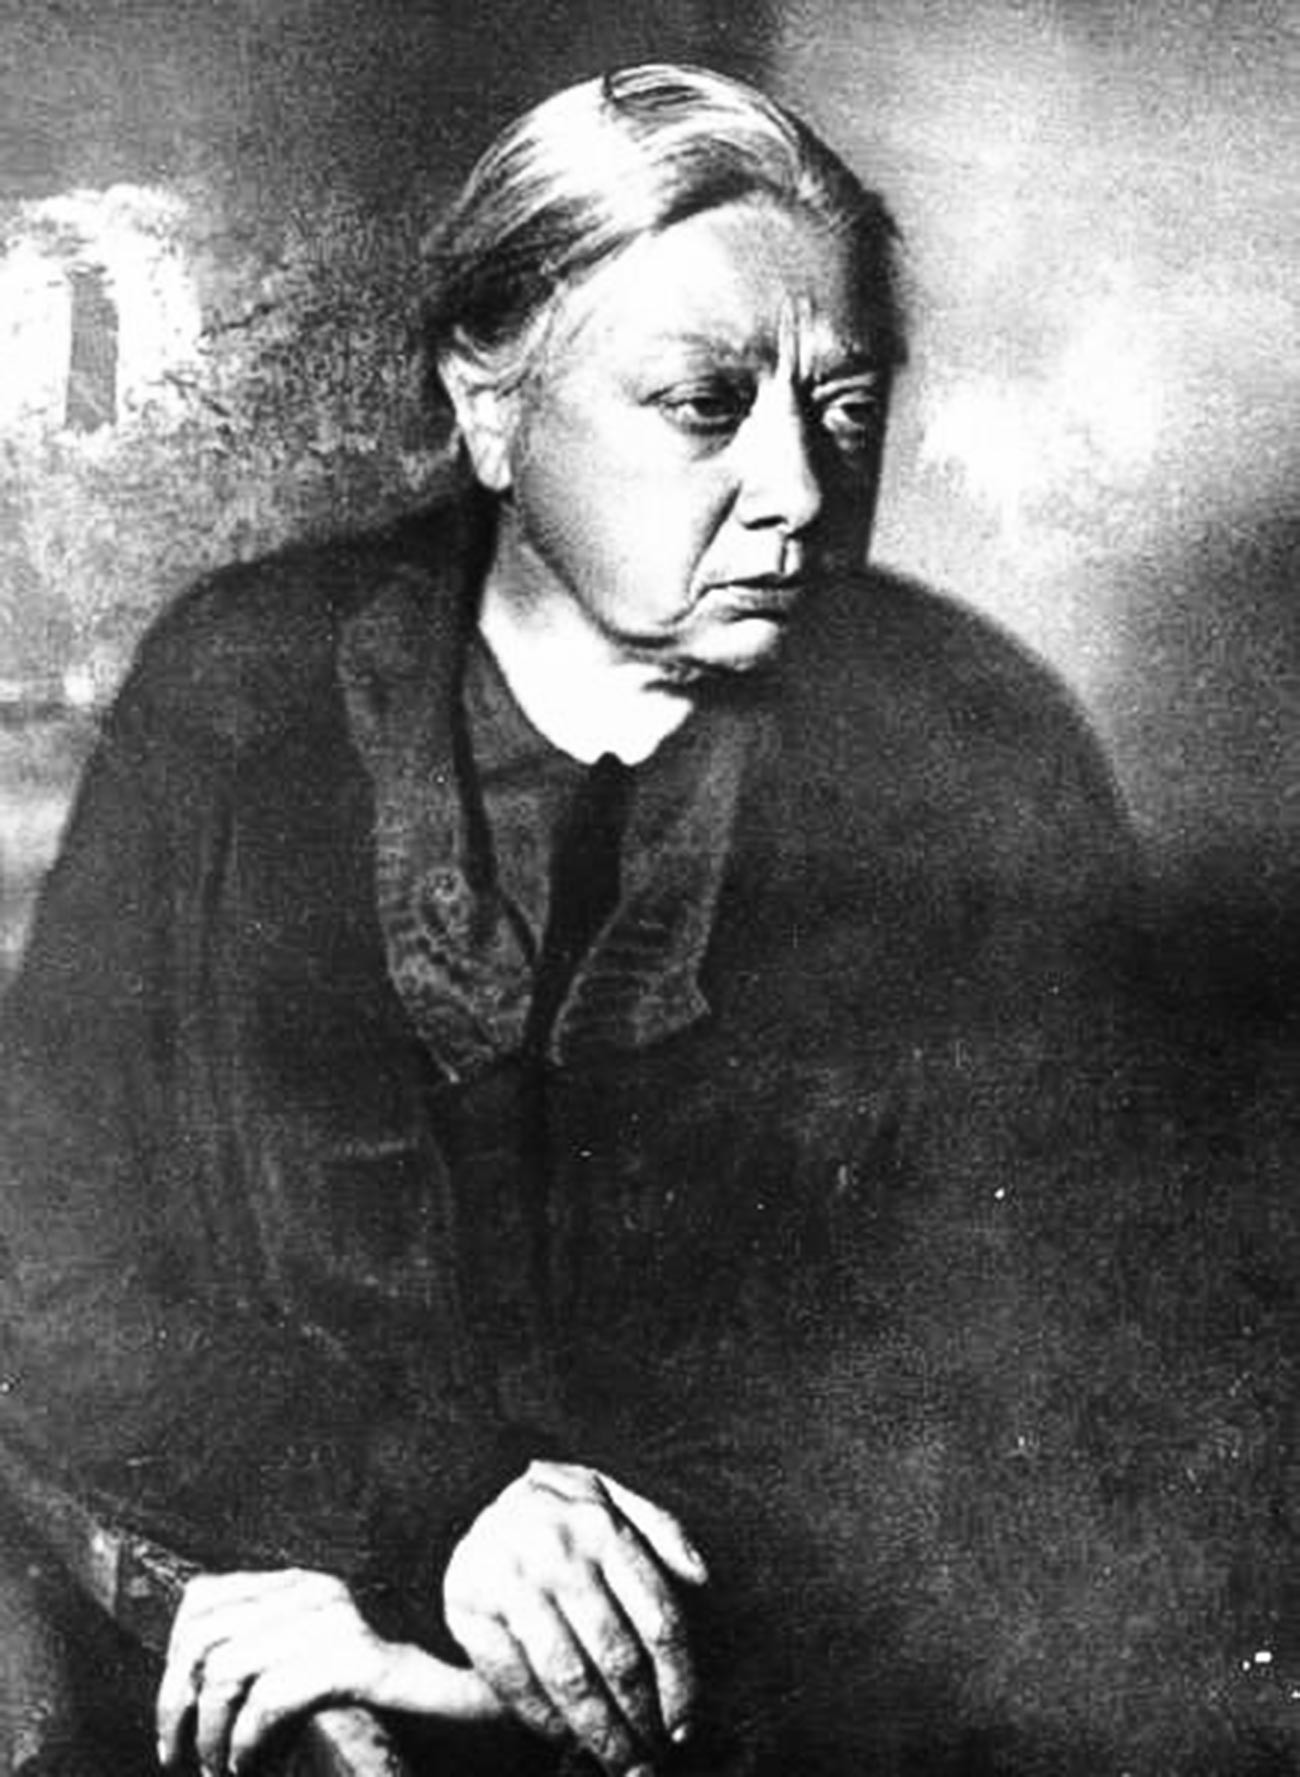 Nadiezhda Krúpskaia, esposa de Lenin y revolucionaria, 1932

